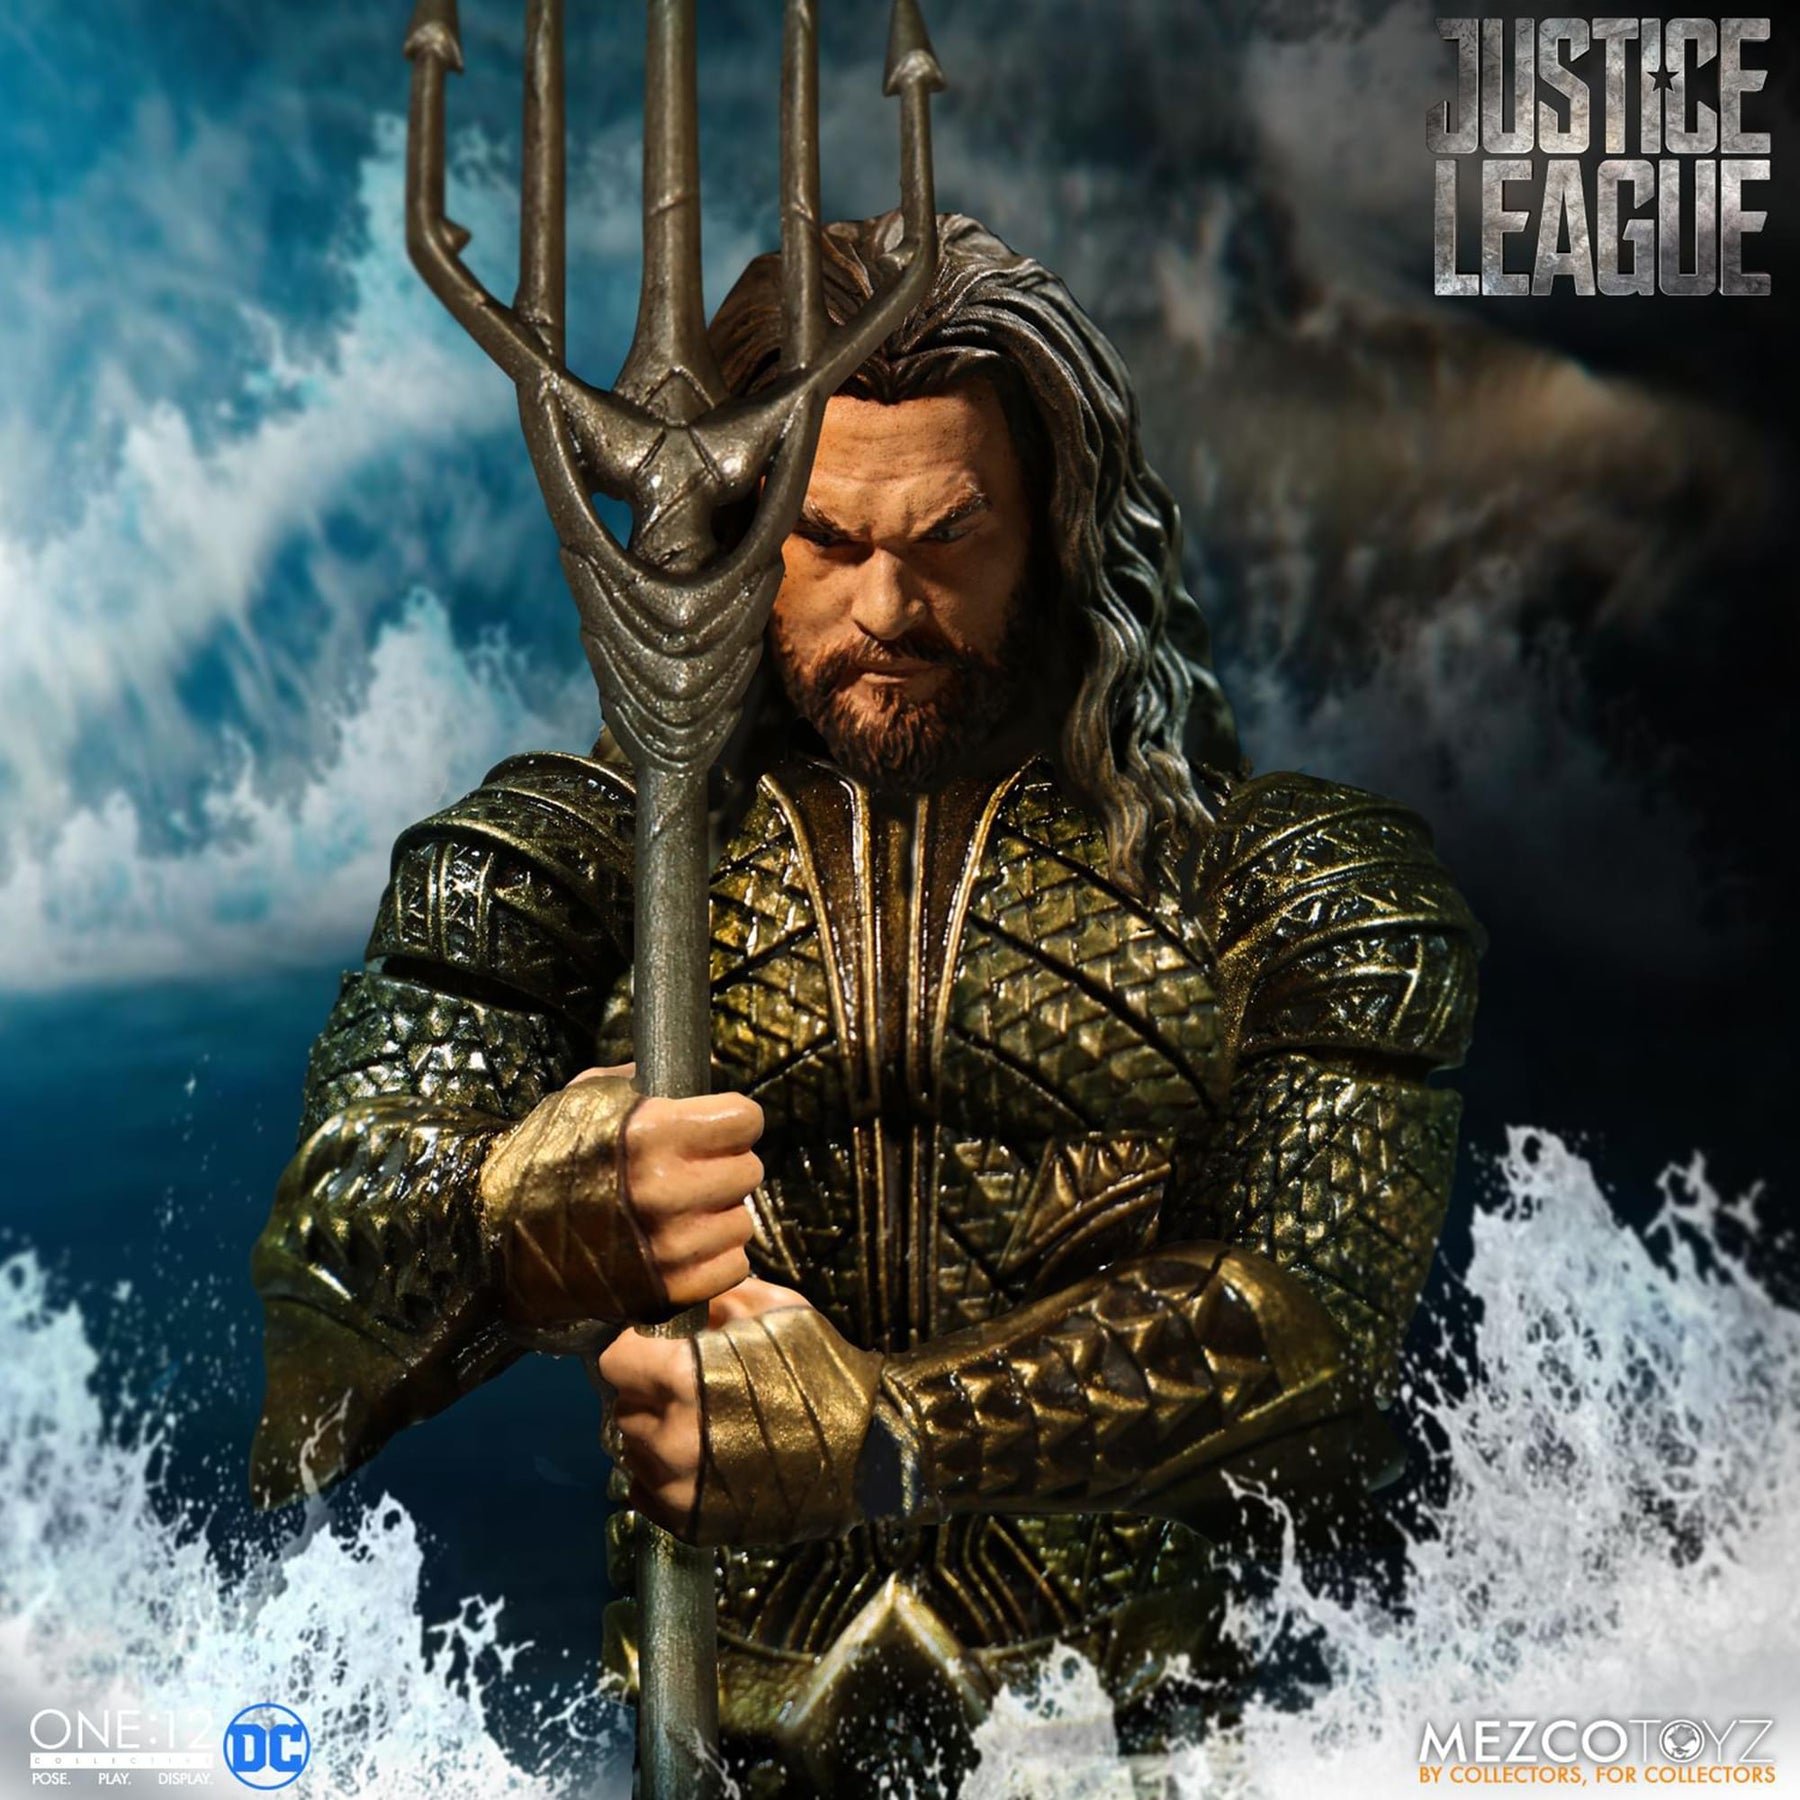 DC Comics One:12 Collective 6-Inch Action Figure - Justice League Aquaman